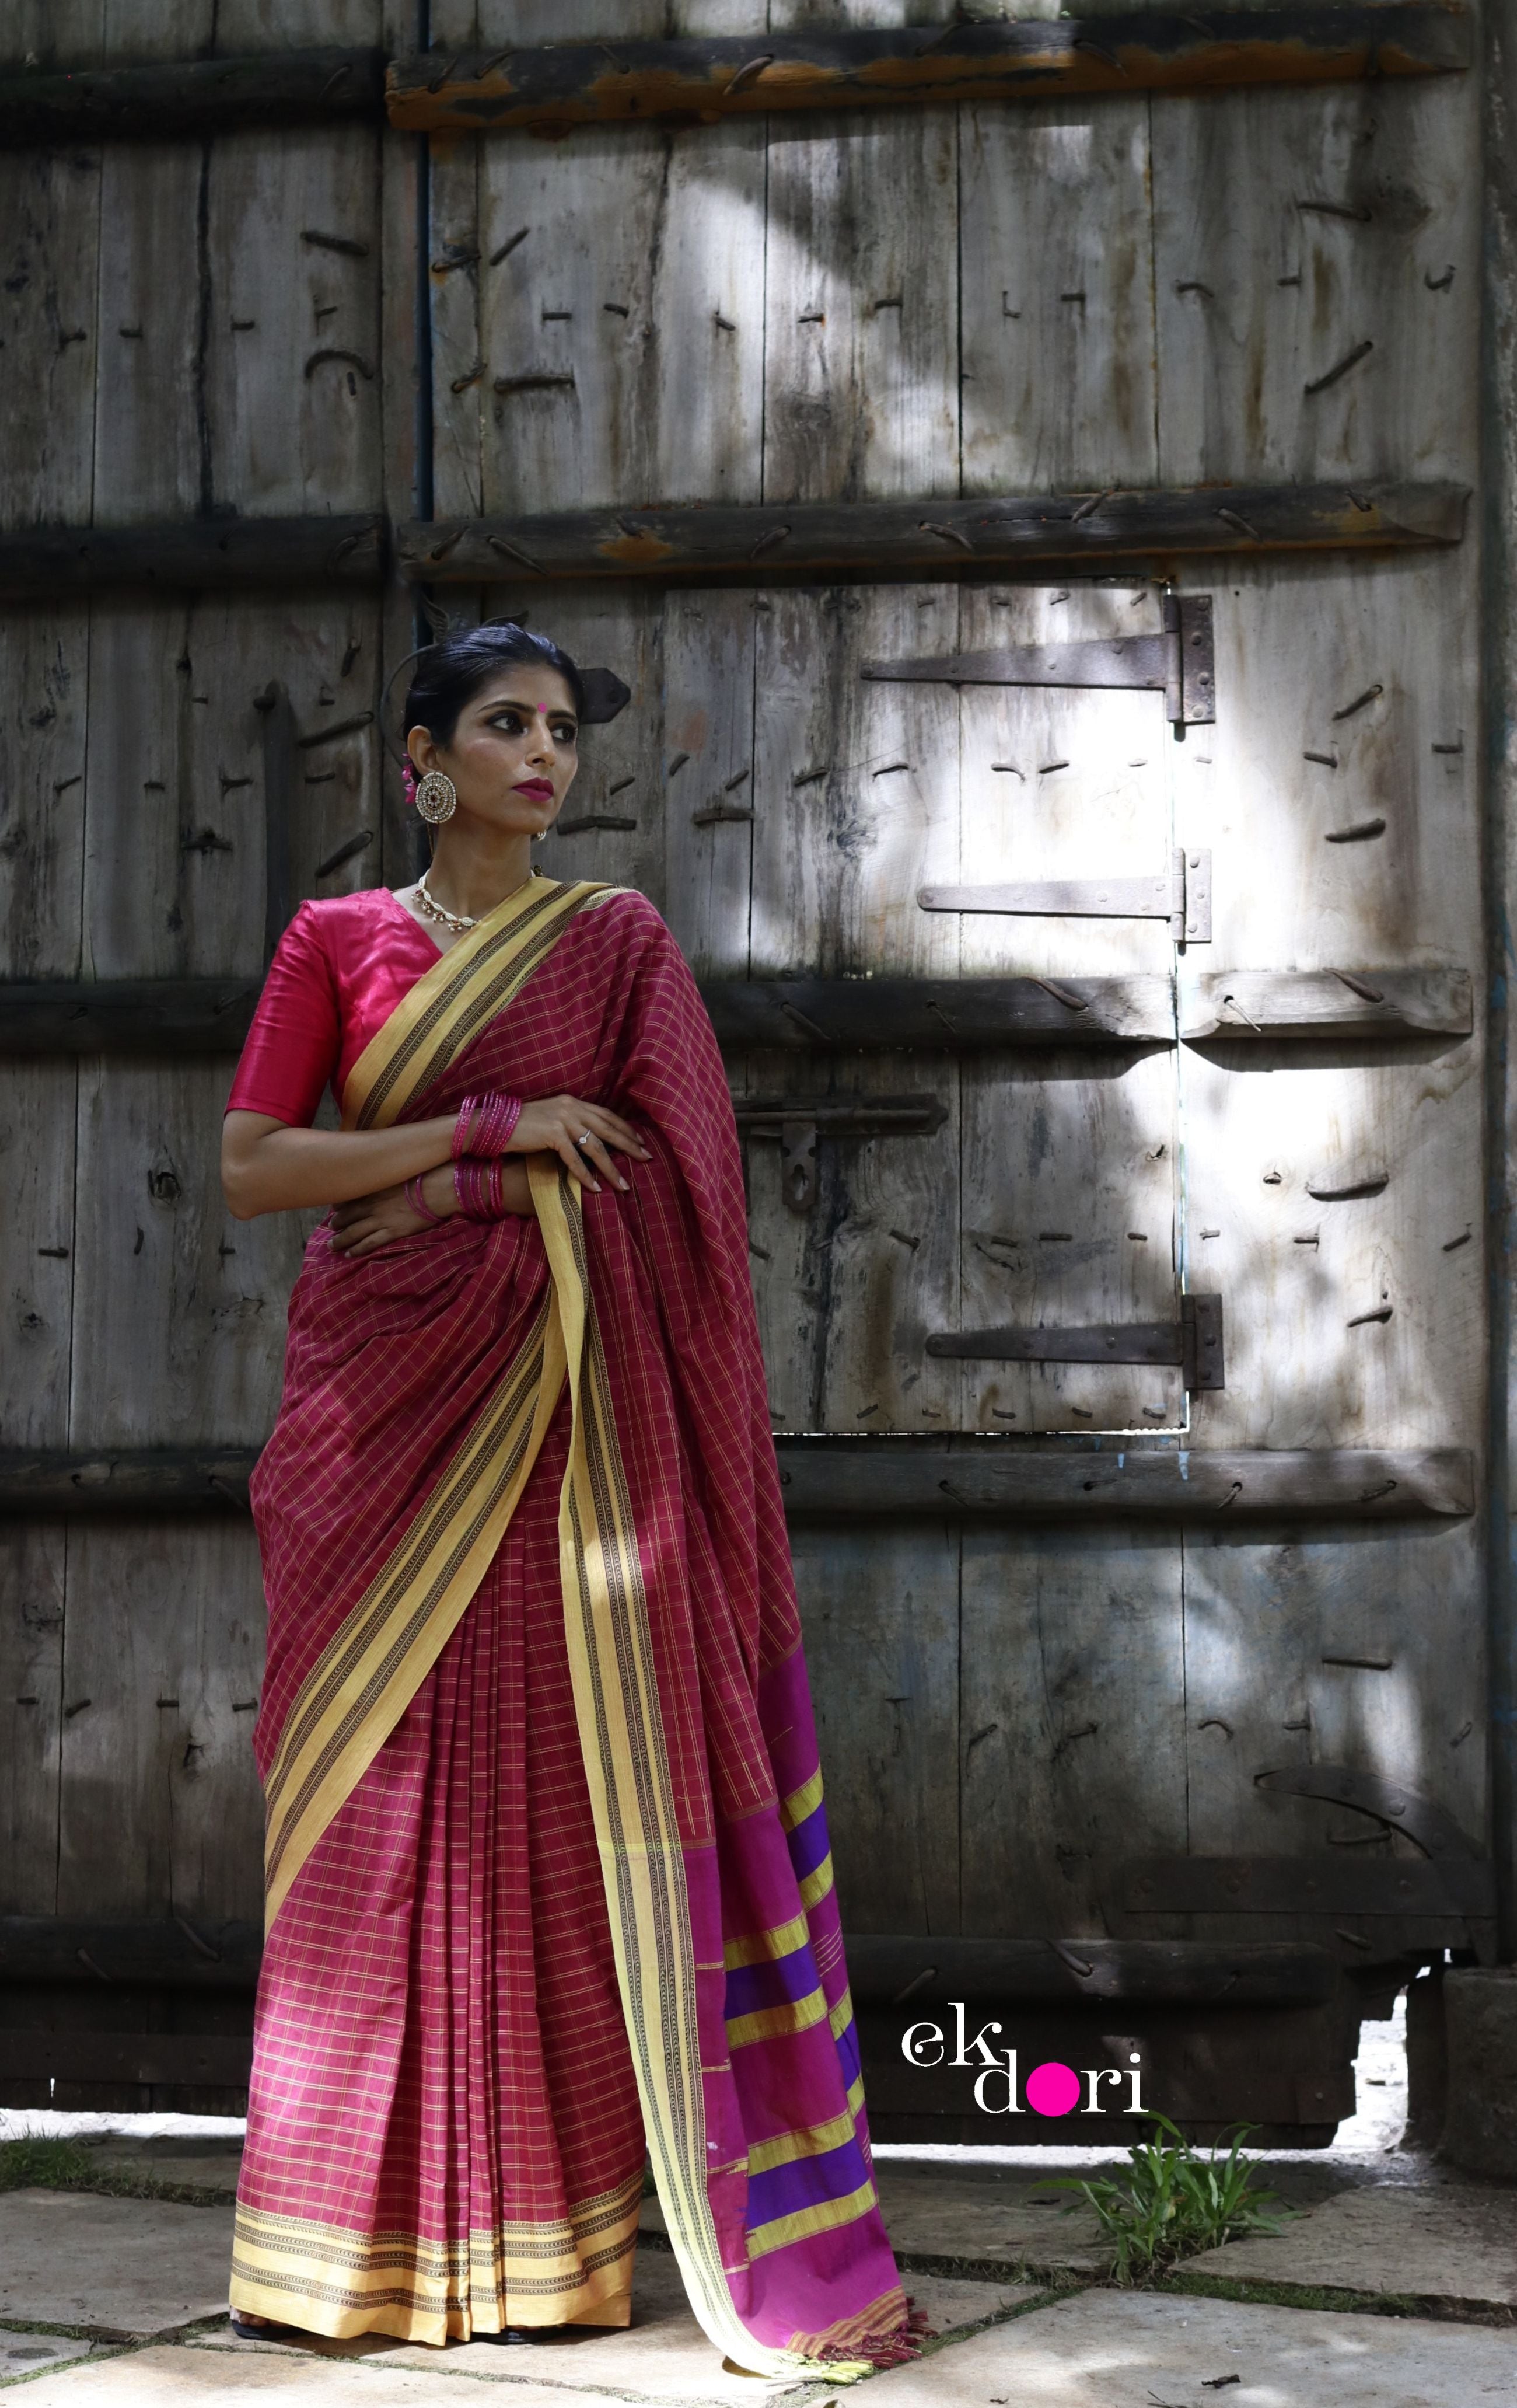 Kaisori Malhar Dabu Indigo Silk Cotton saree